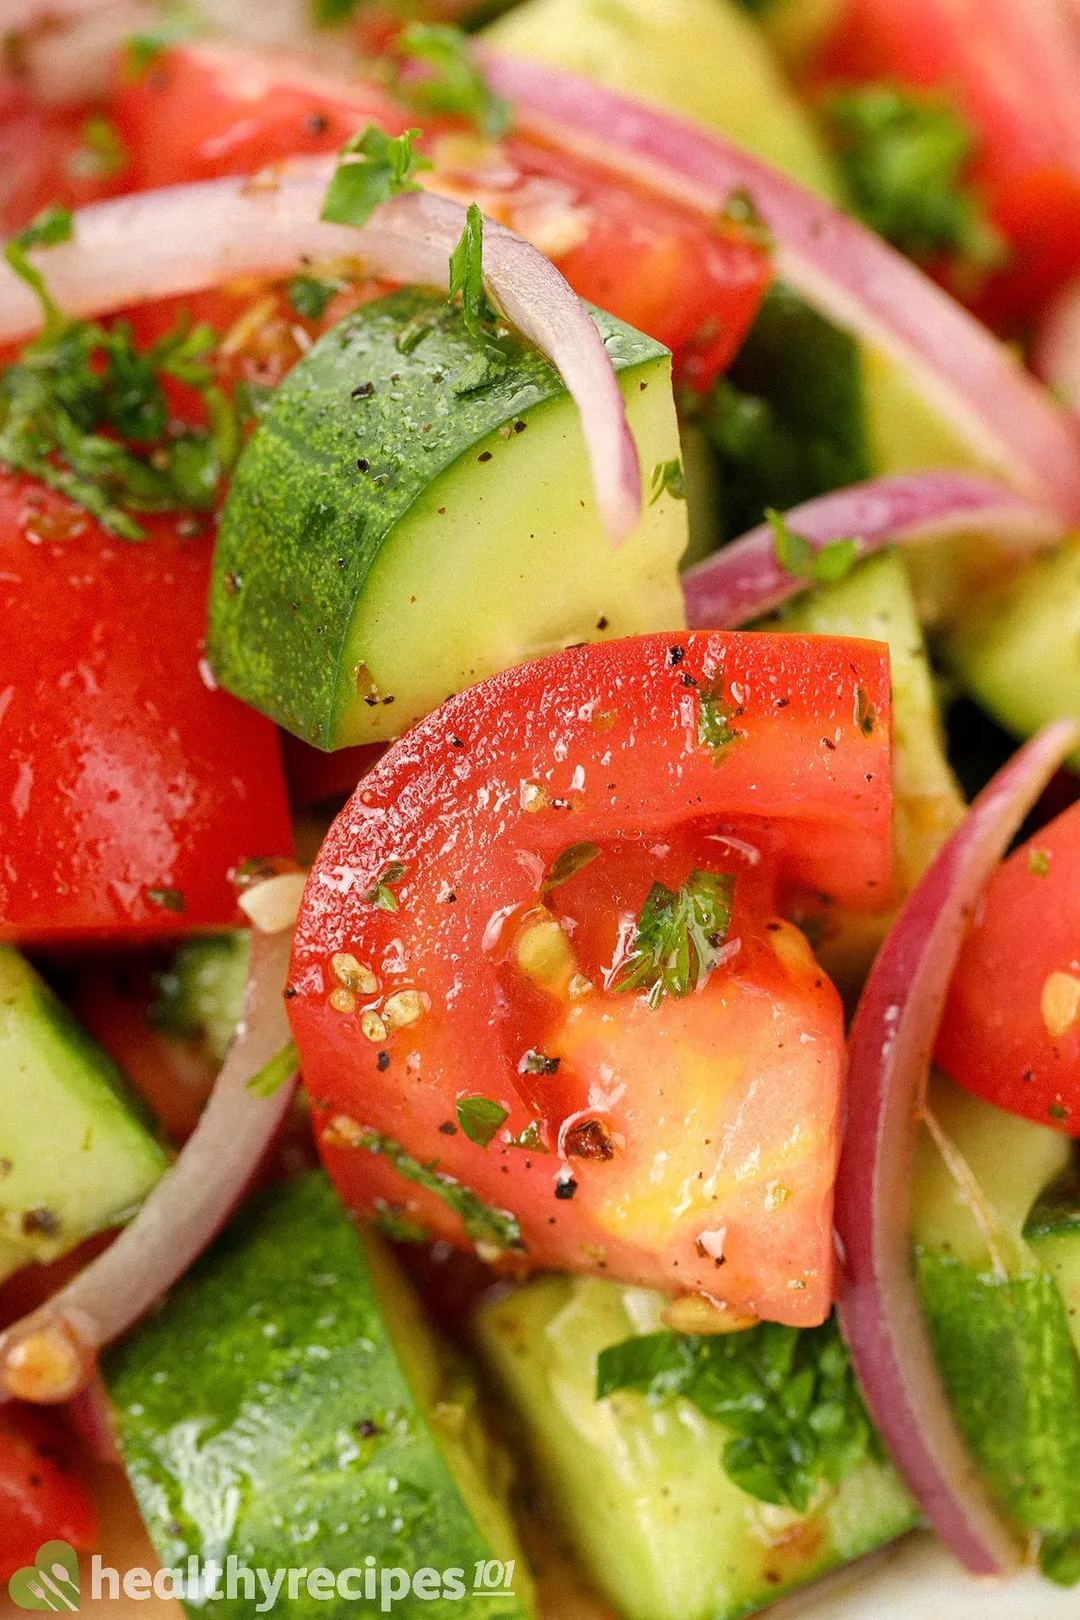 A close-up shot of a cucumber tomato salad